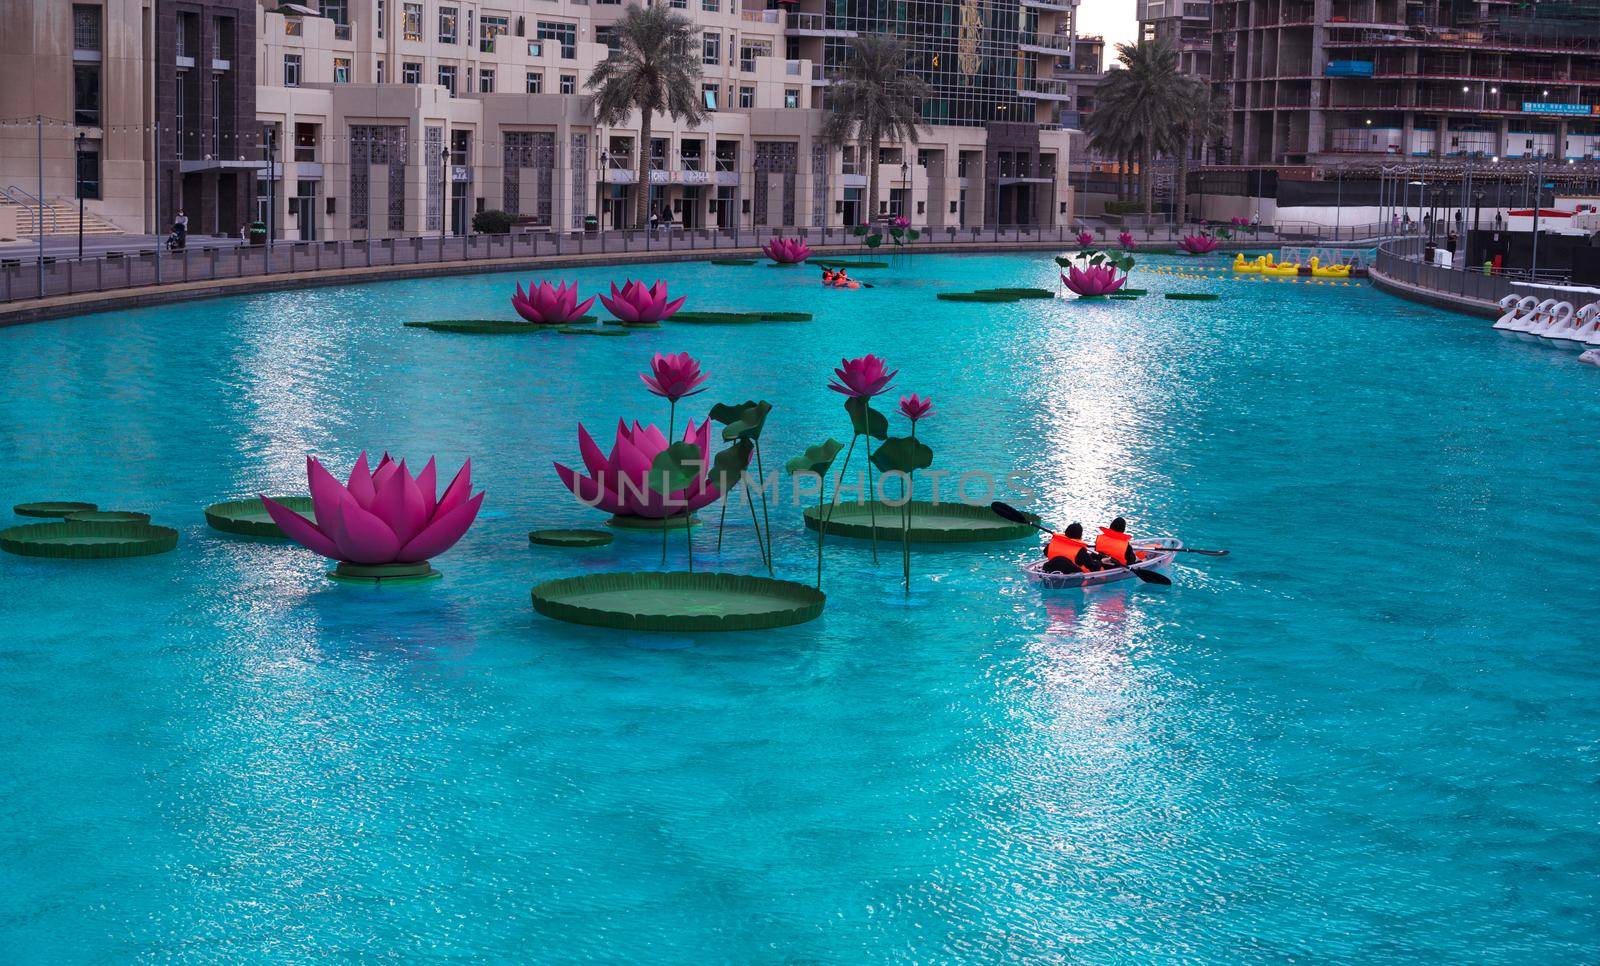 JAN 7th 2021, DUBAI, UAE. TOURISTS RIDING THE BOATS IN THE BEAUTIFUL LOTUS FLOWER POOL AT THE RECREATIONAL BOULEVARD AREA OF THE BURJ PARK, DUBAI,UAE.